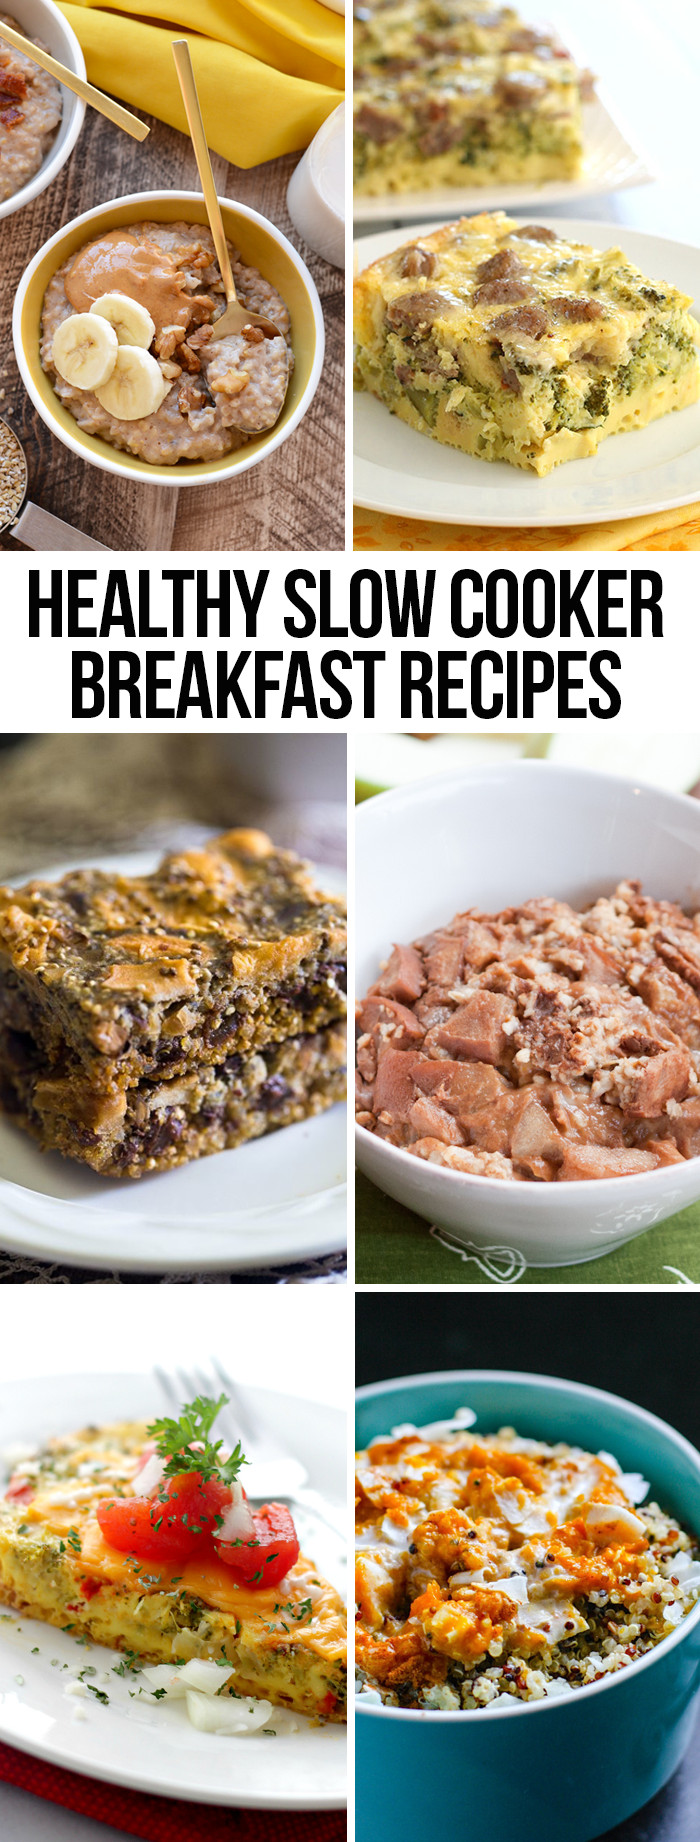 Healthy Recipes Breakfast
 Healthy Slow Cooker Breakfast Recipes